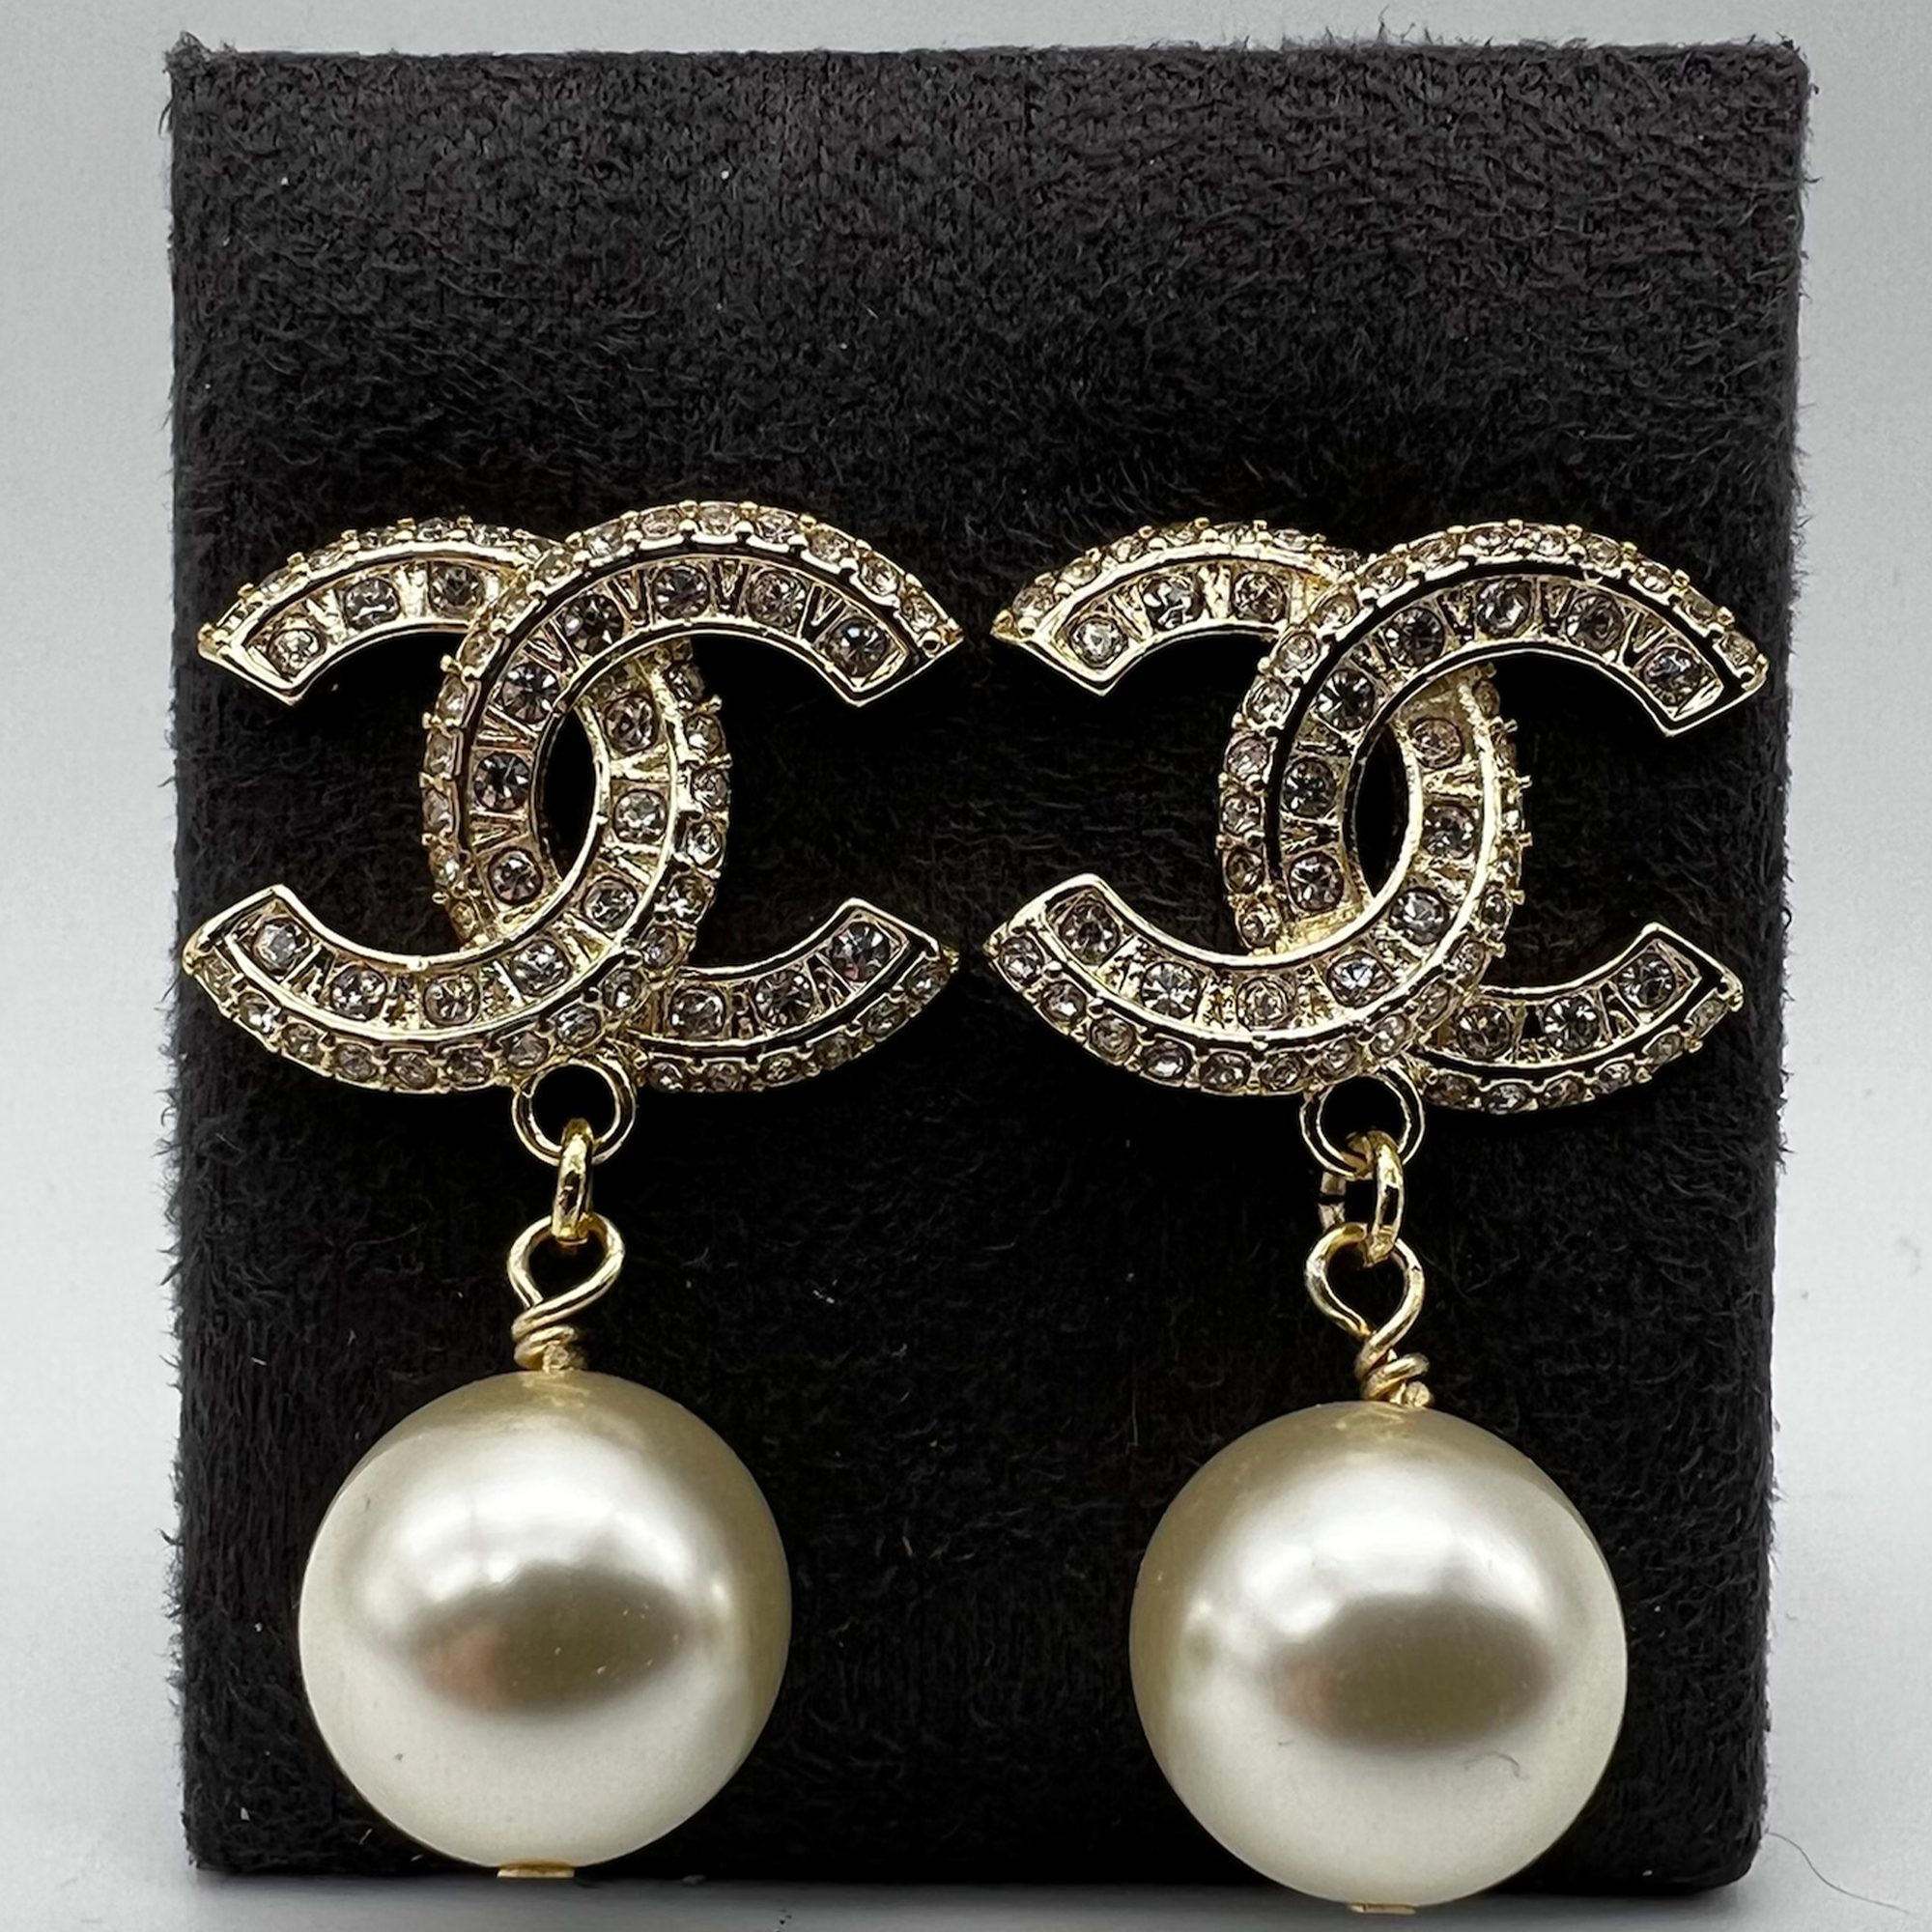 Authentic Chanel Pearl Drop Earrings  Chanel pearls Pearl earrings  dangle Gold earrings dangle